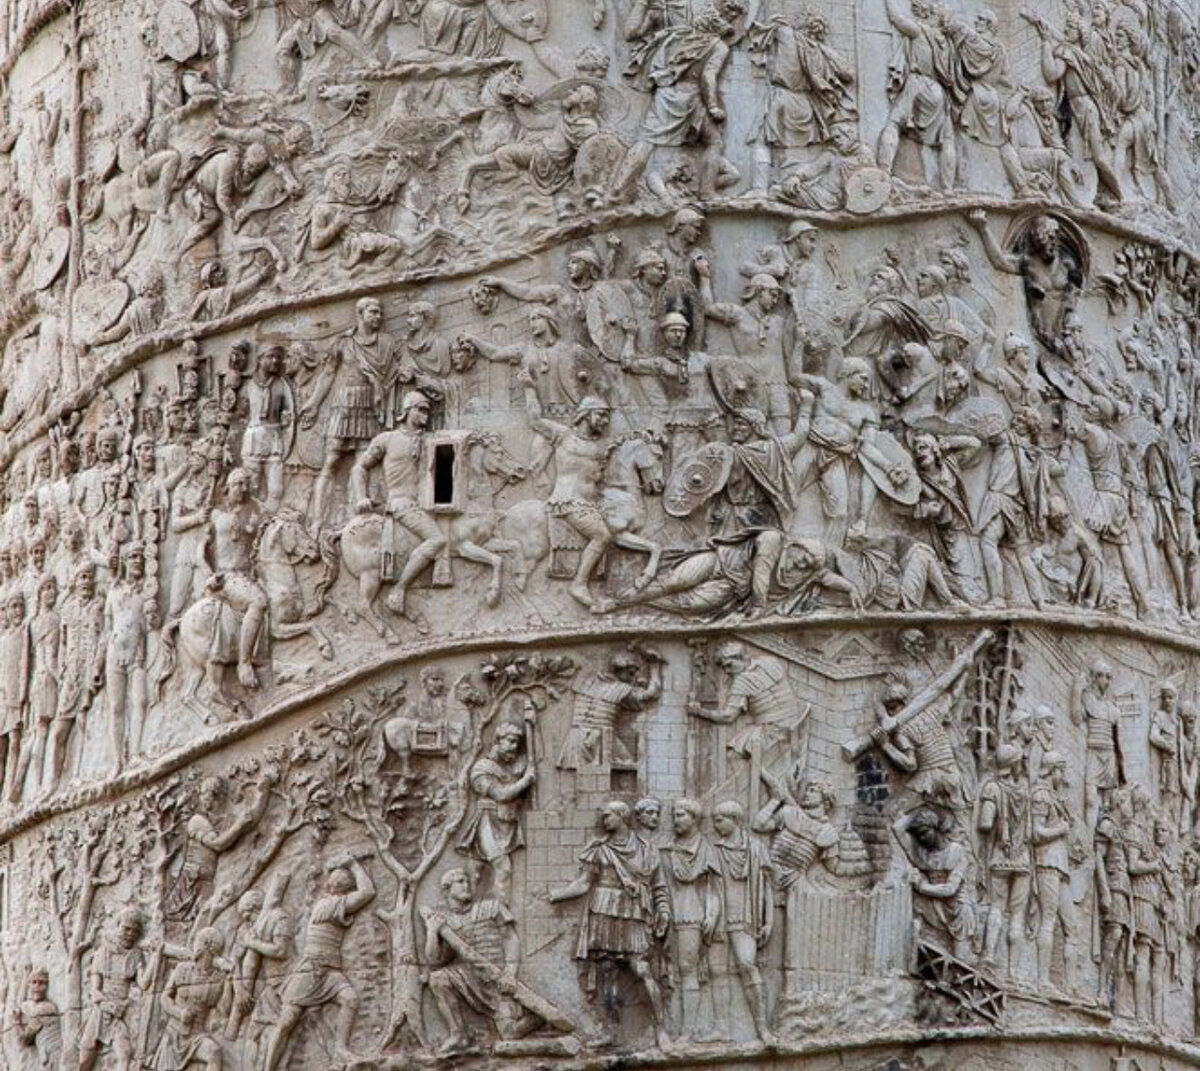 Колонна траяна в риме. Колонна Траяна в древнем Риме. Колонна Траяна рельефы. Колонна Траяна в Риме статуя. 38-Метровая колонна Траяна.